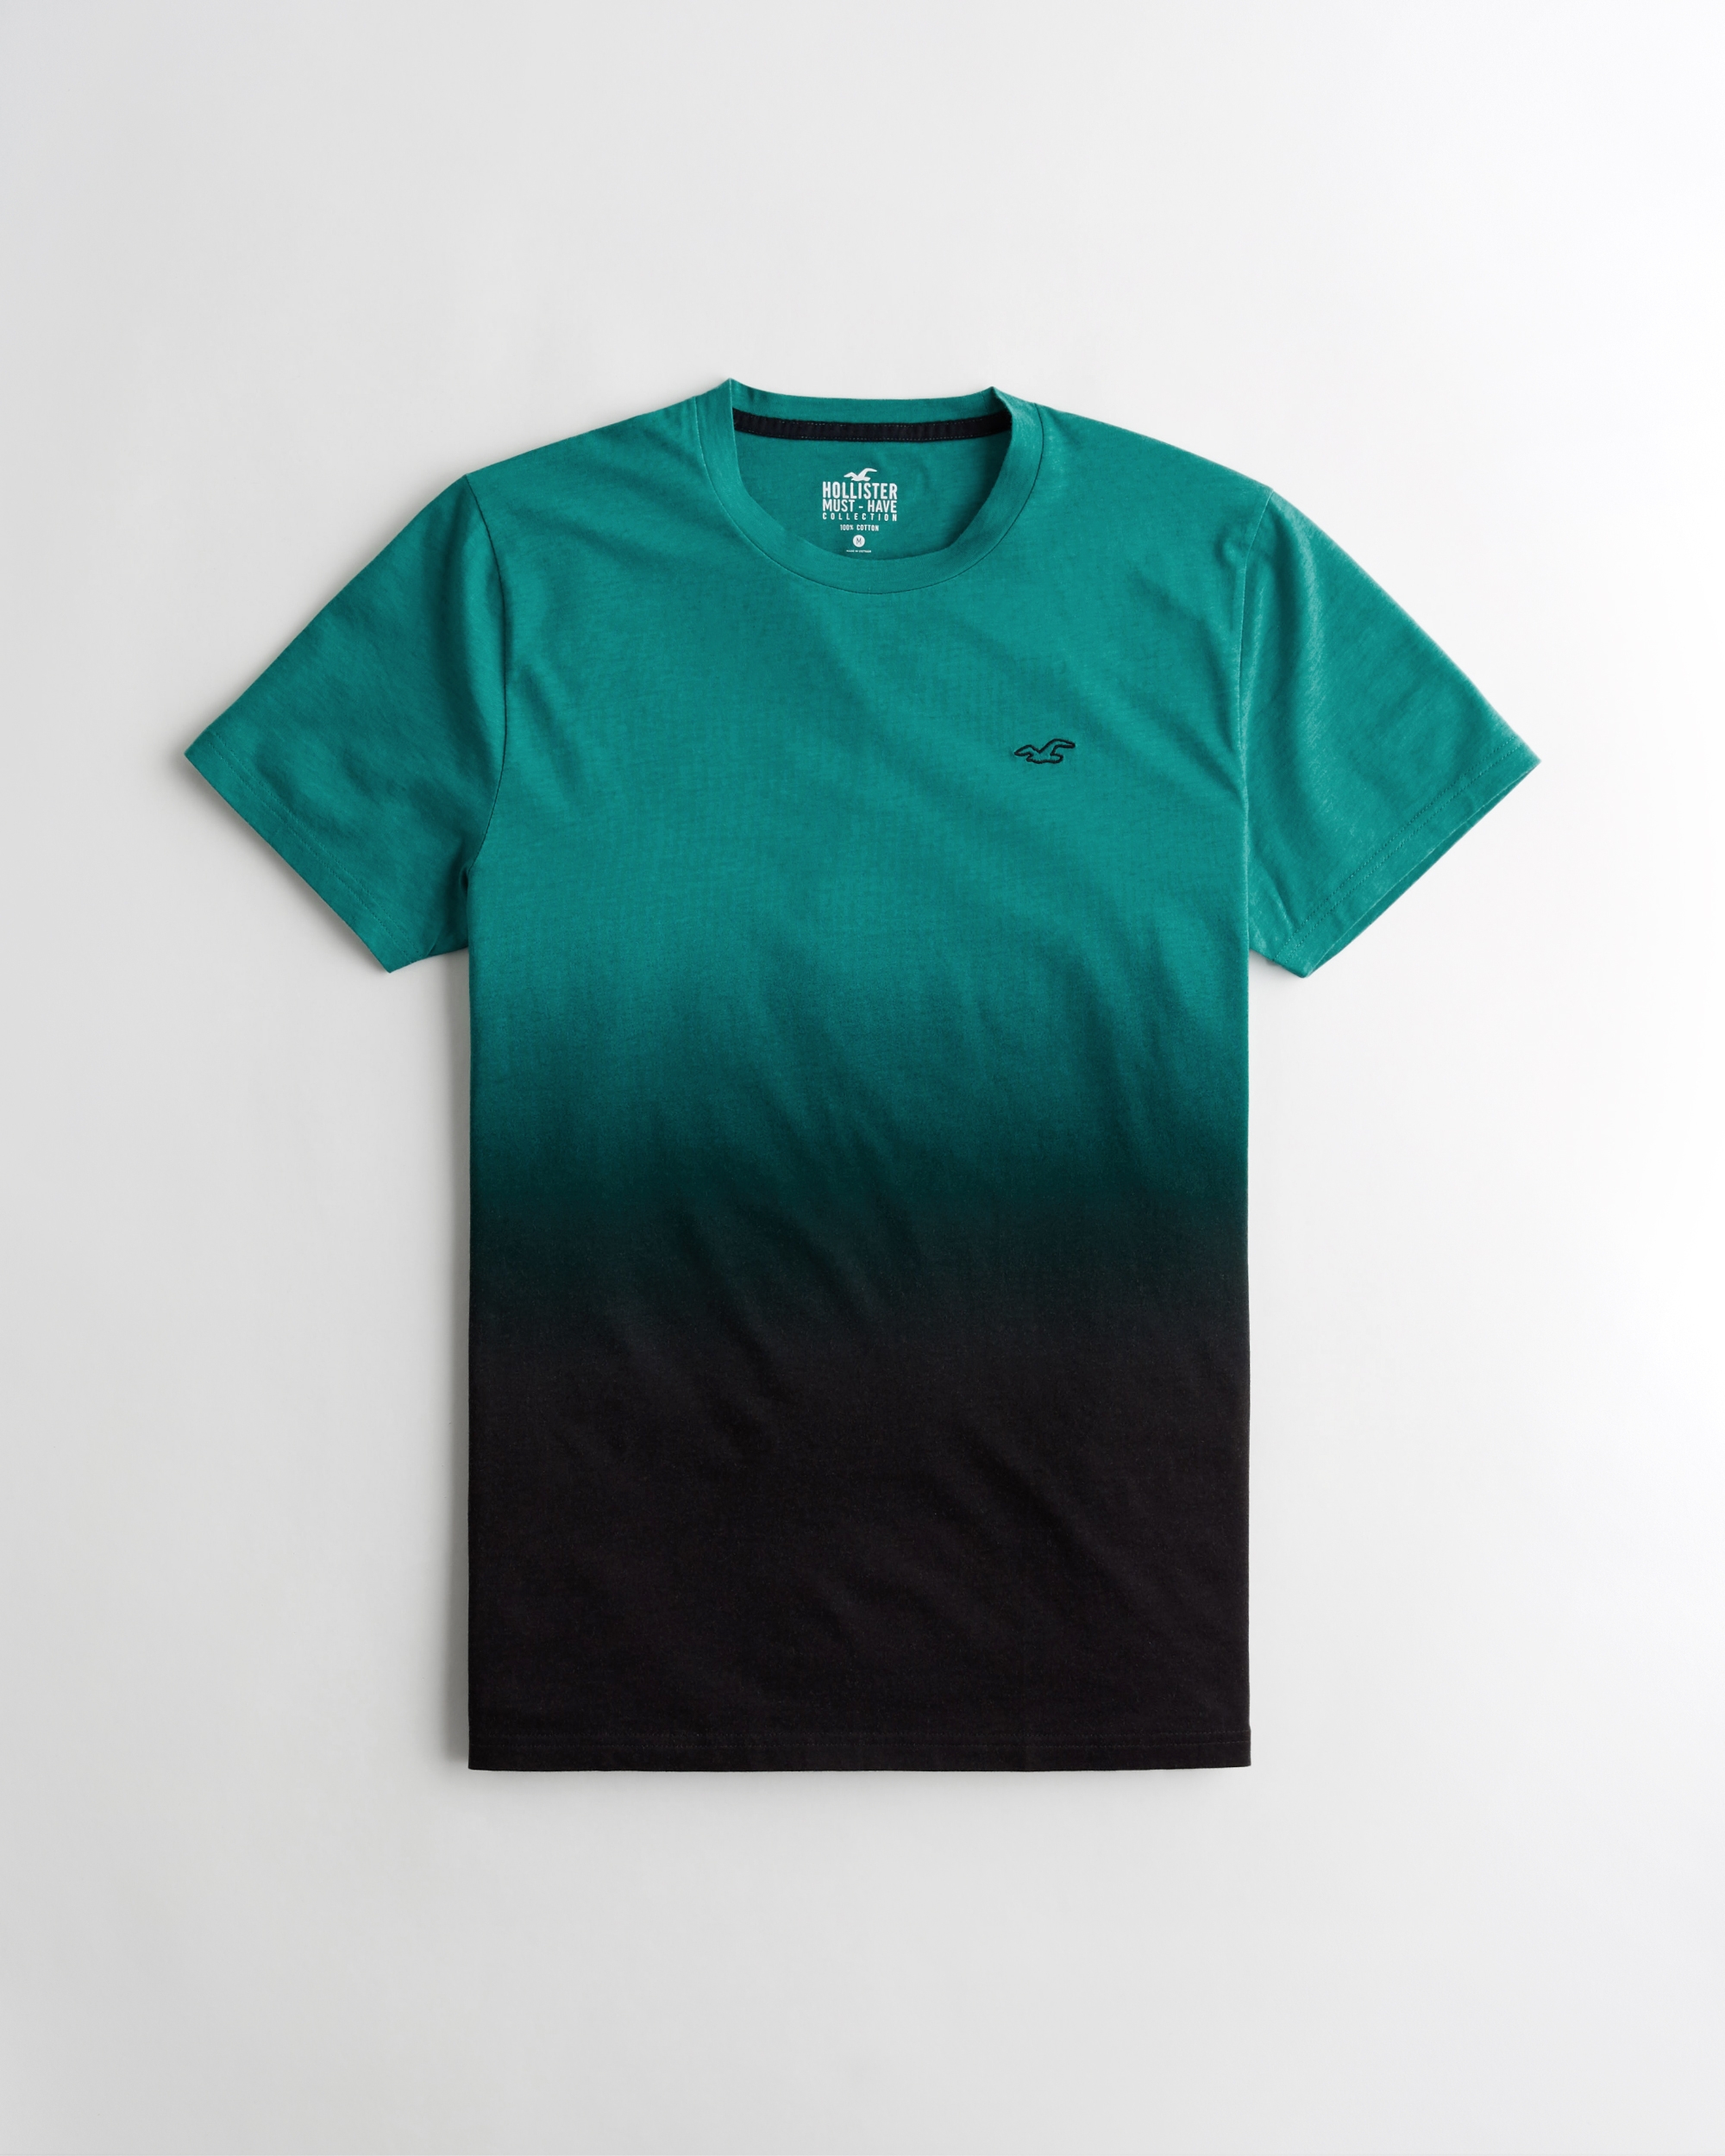 T-Shirts \u0026 Henleys for Guys | Hollister Co.